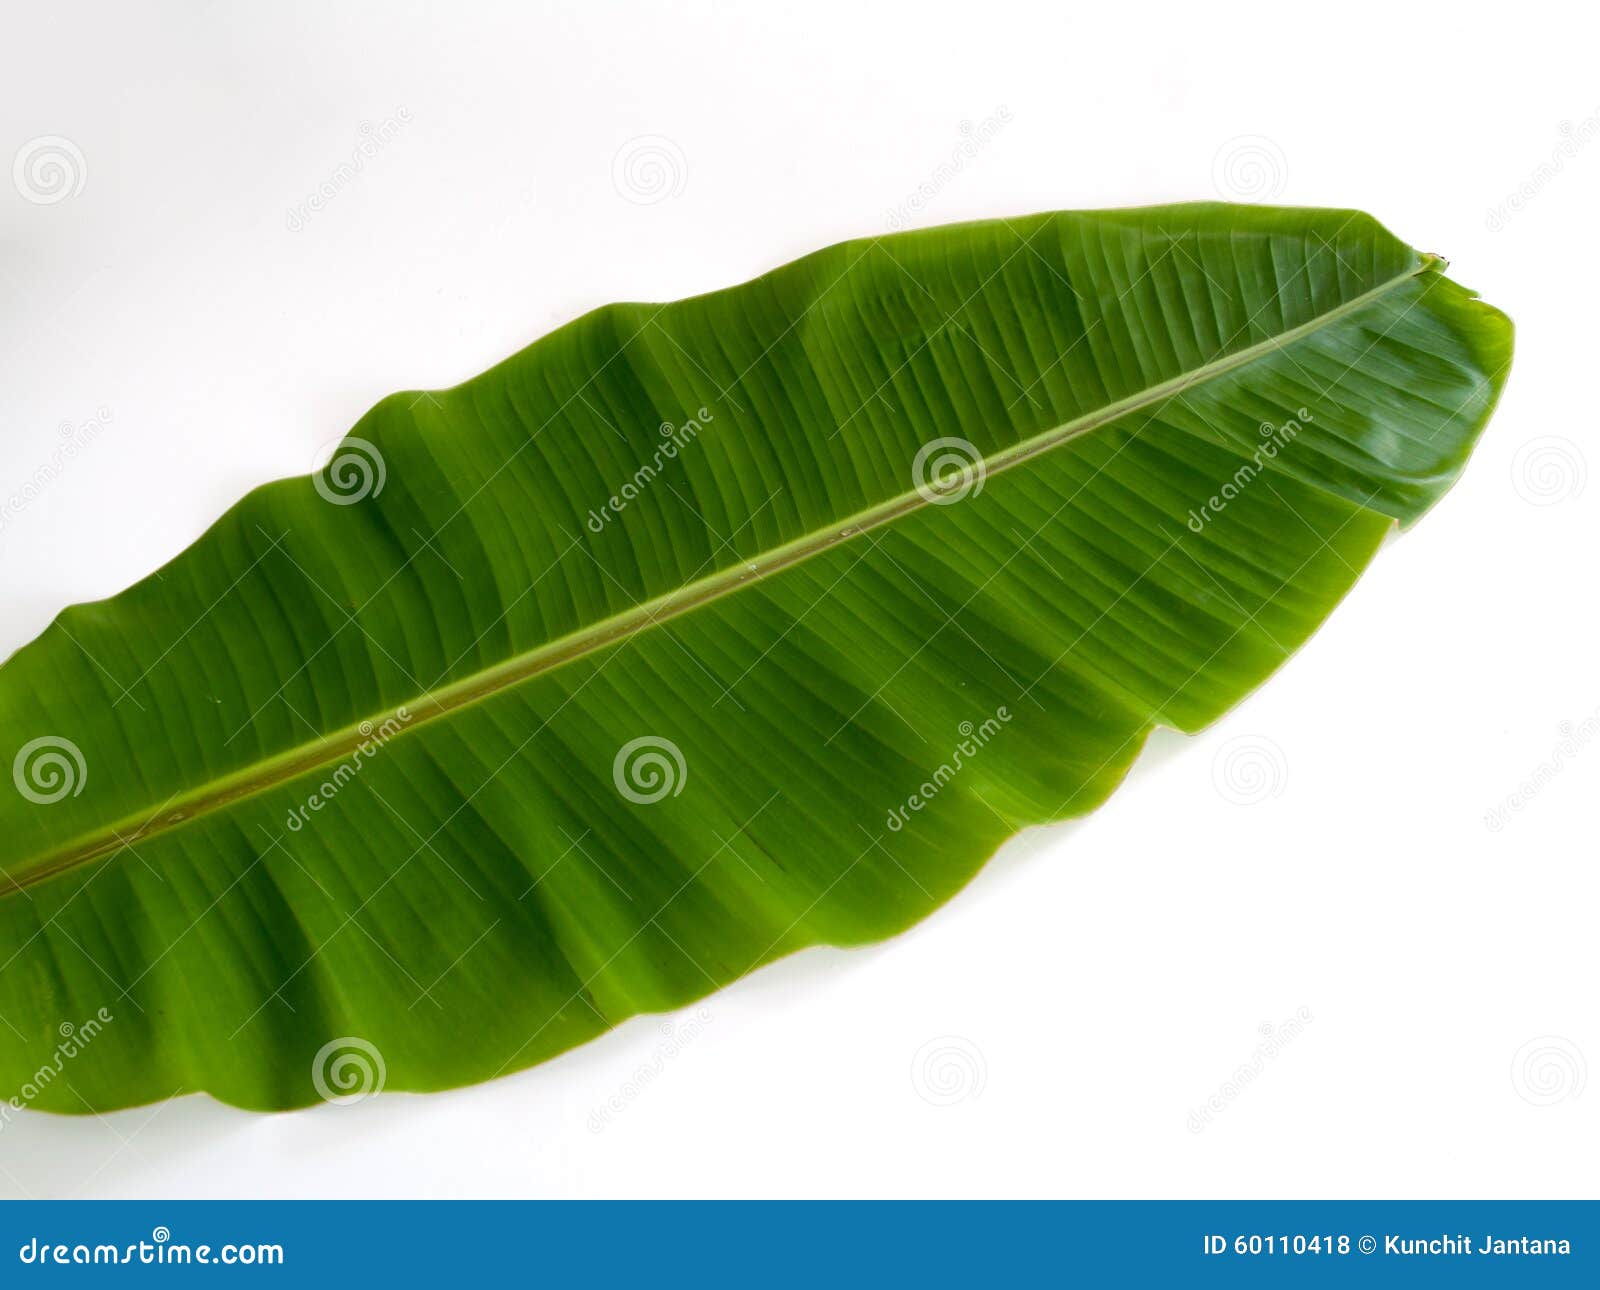 Banana leaf stock photo. Image of foliage, summer, abstract - 60110418